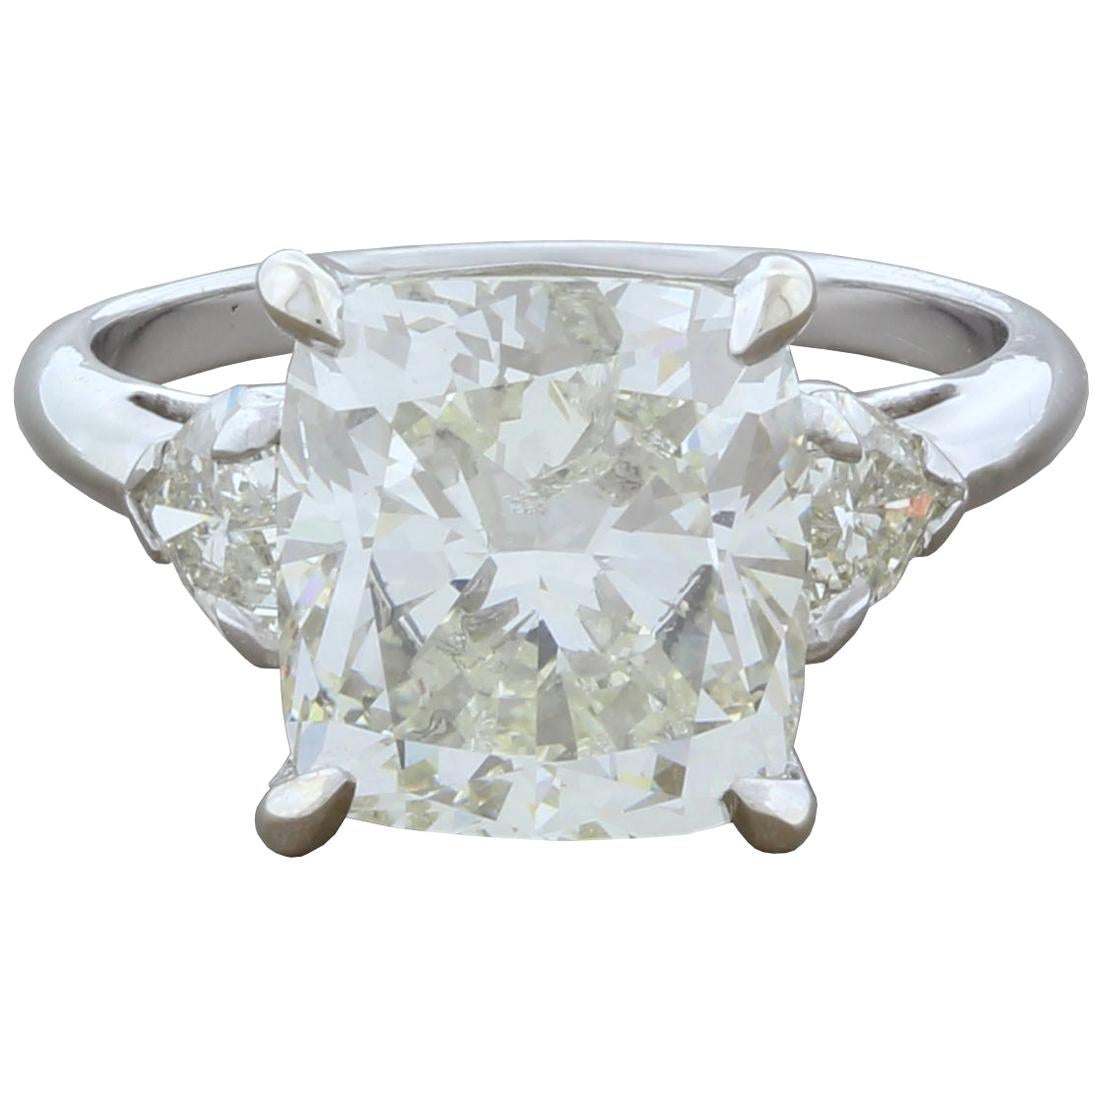 5.05 Carat Cushion Cut Diamond Gold Engagement Ring